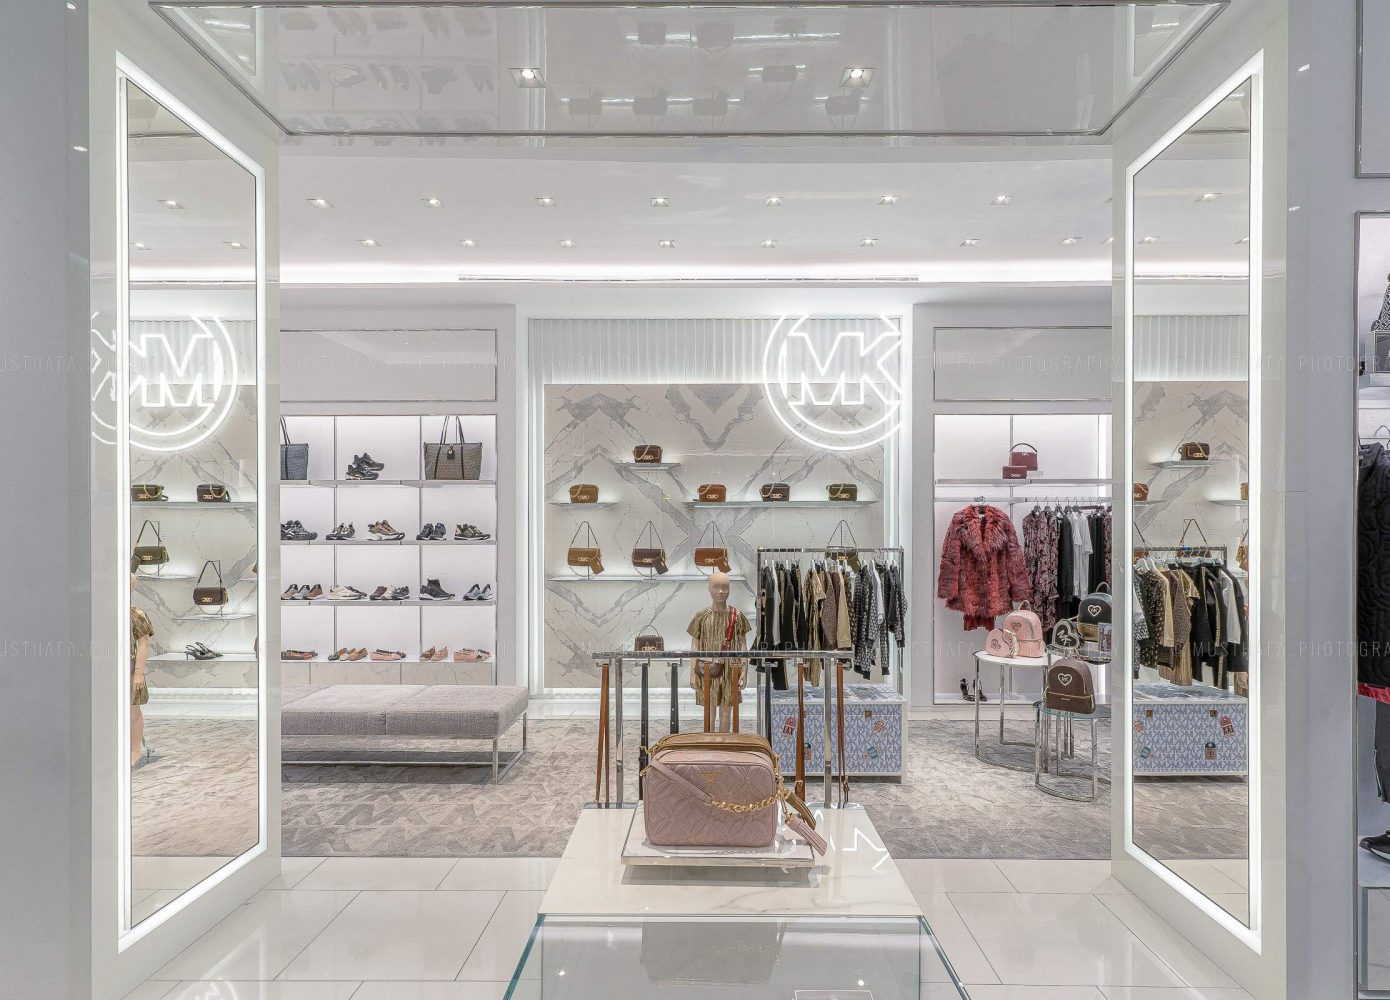 Michael Kors fashion store high end boutique retail photography Dubai Abu Dhabi UAE Qatar Doha Kuwait Bahrain Oman Saudi Arabia KSA Riyadh Bahrain 02